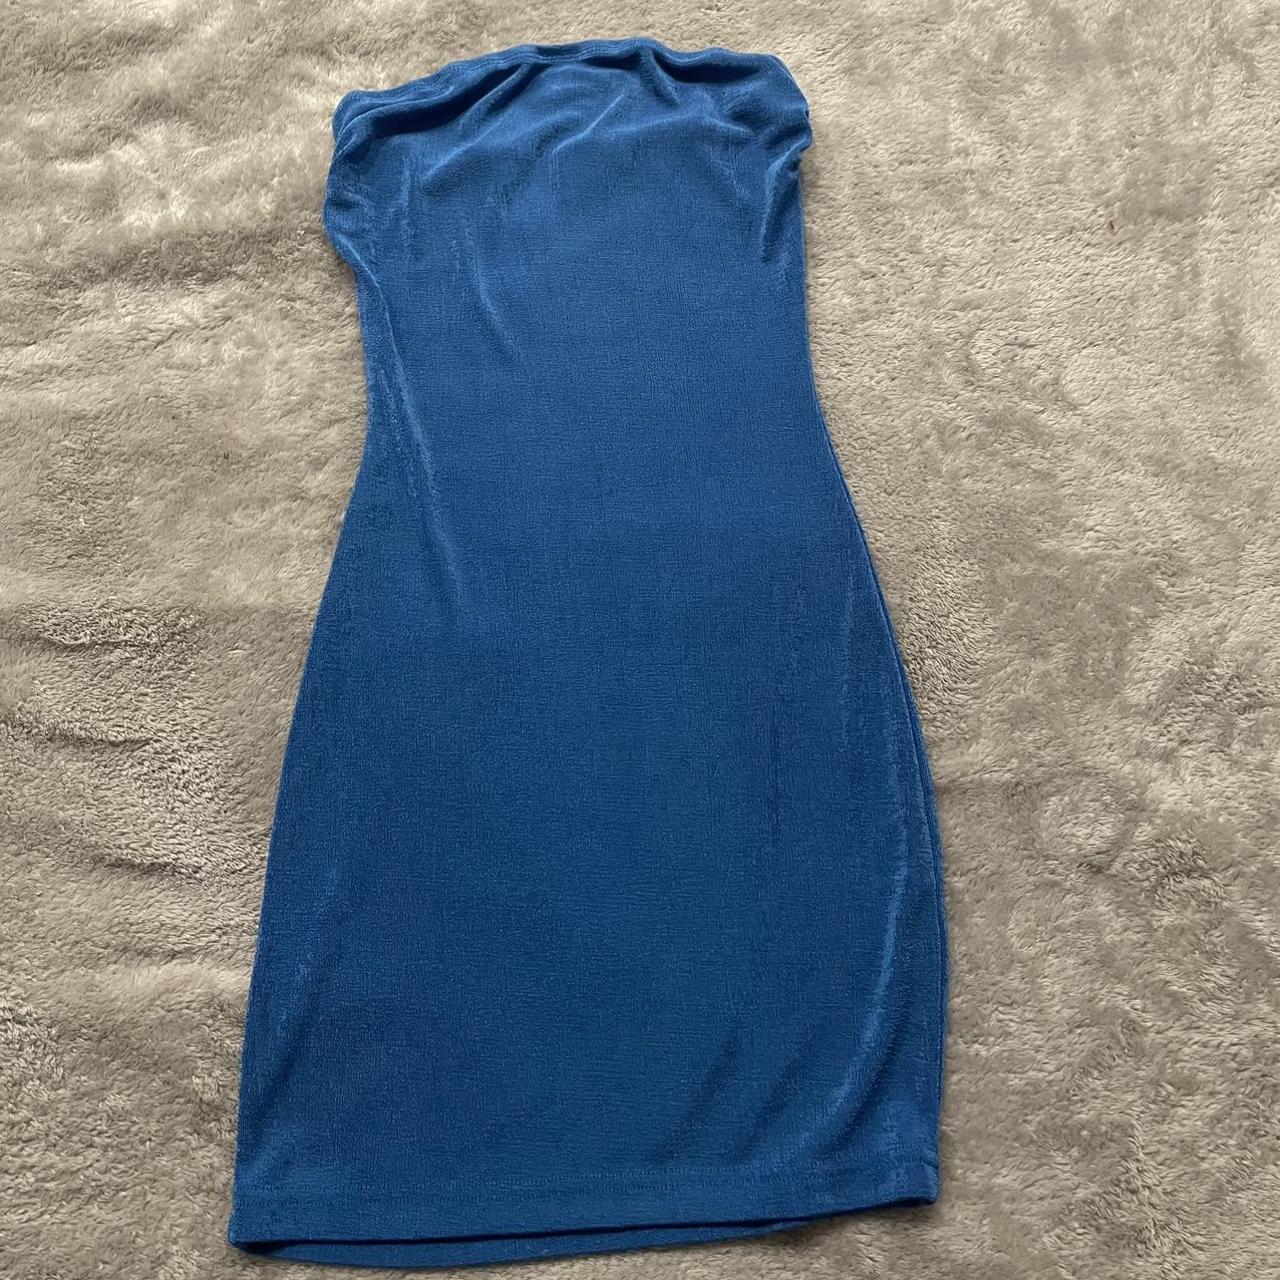 Princess Polly blue strapless mini dress (has a... - Depop